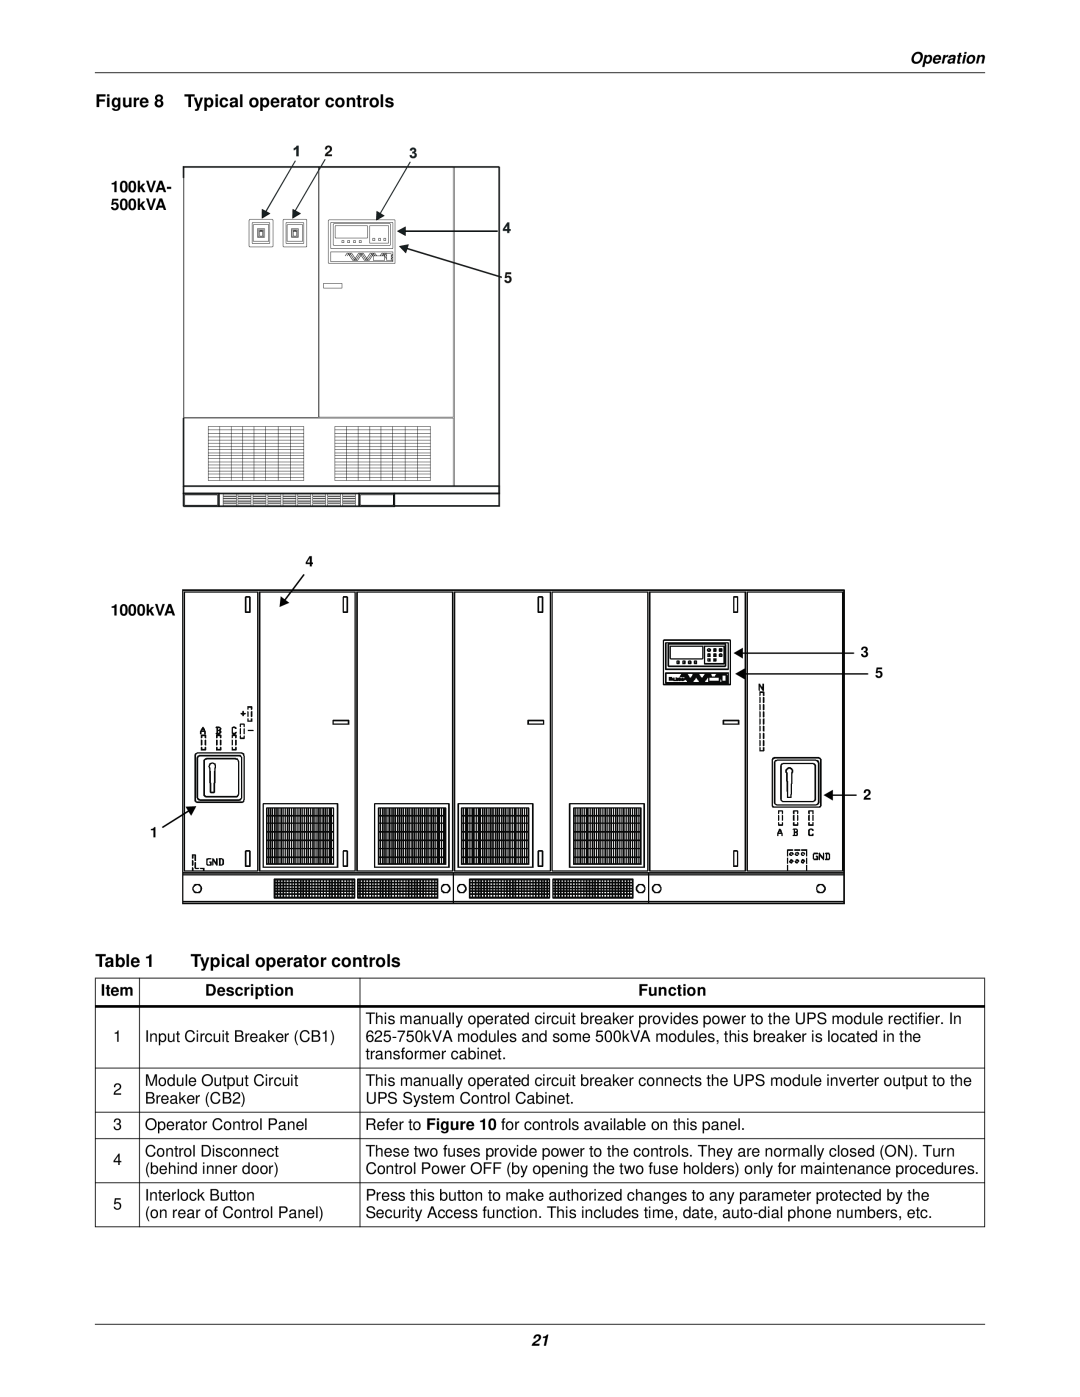 Emerson Series 610 manual Typical operator controls, Operation, 500kVA, 1000kVA, Description, Function 